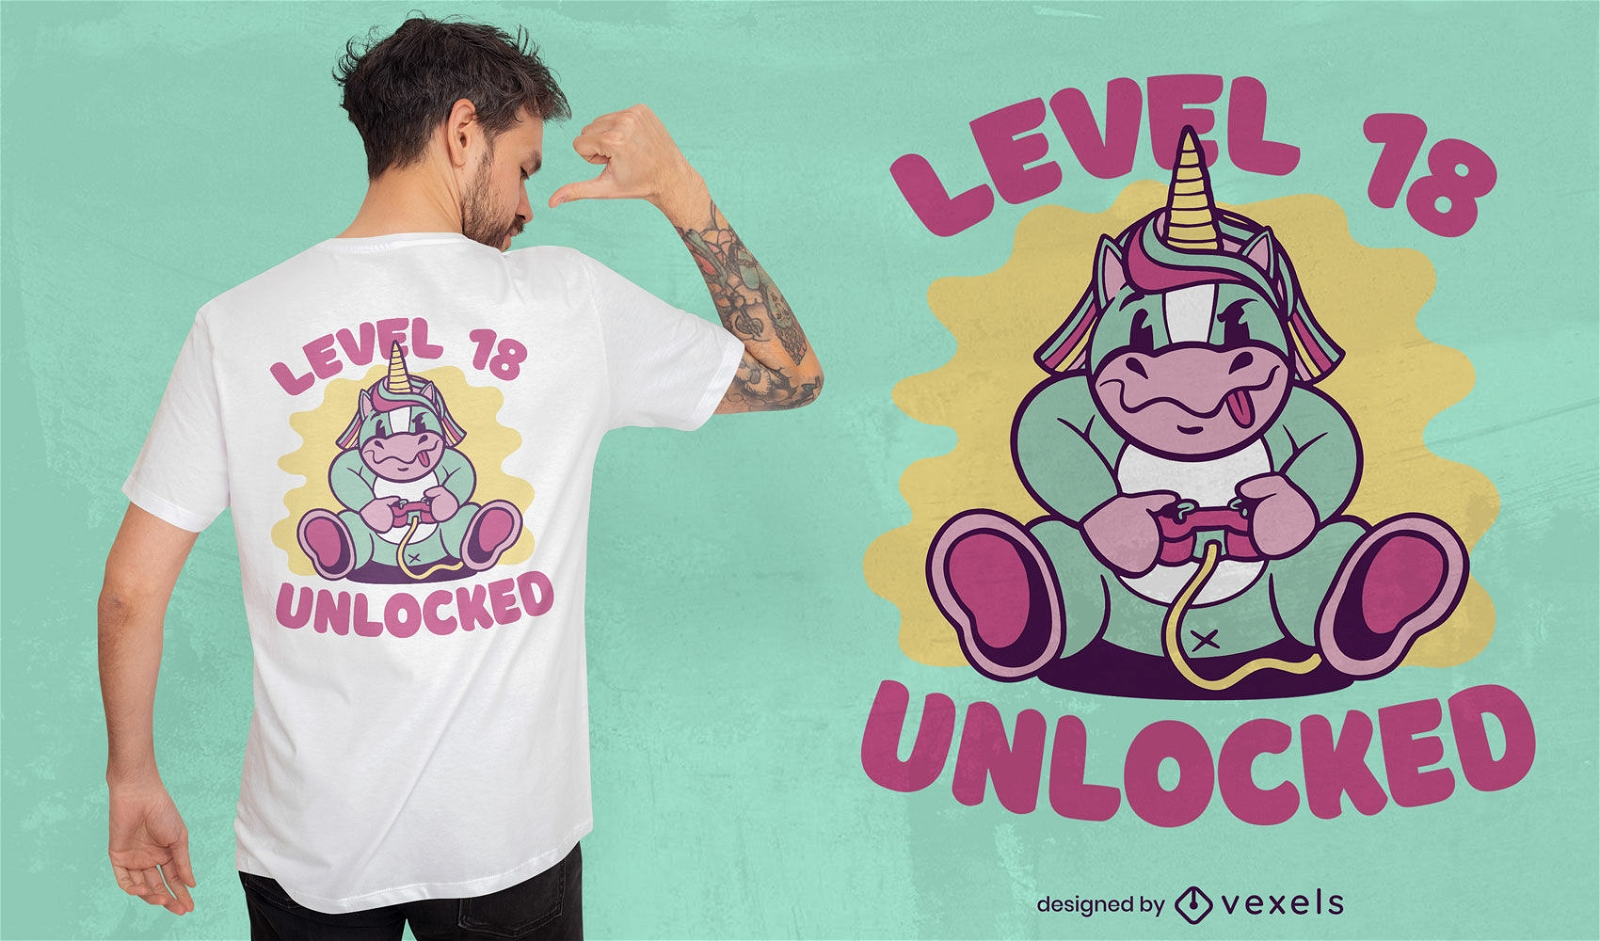 Unicorn playing video games t-shirt design